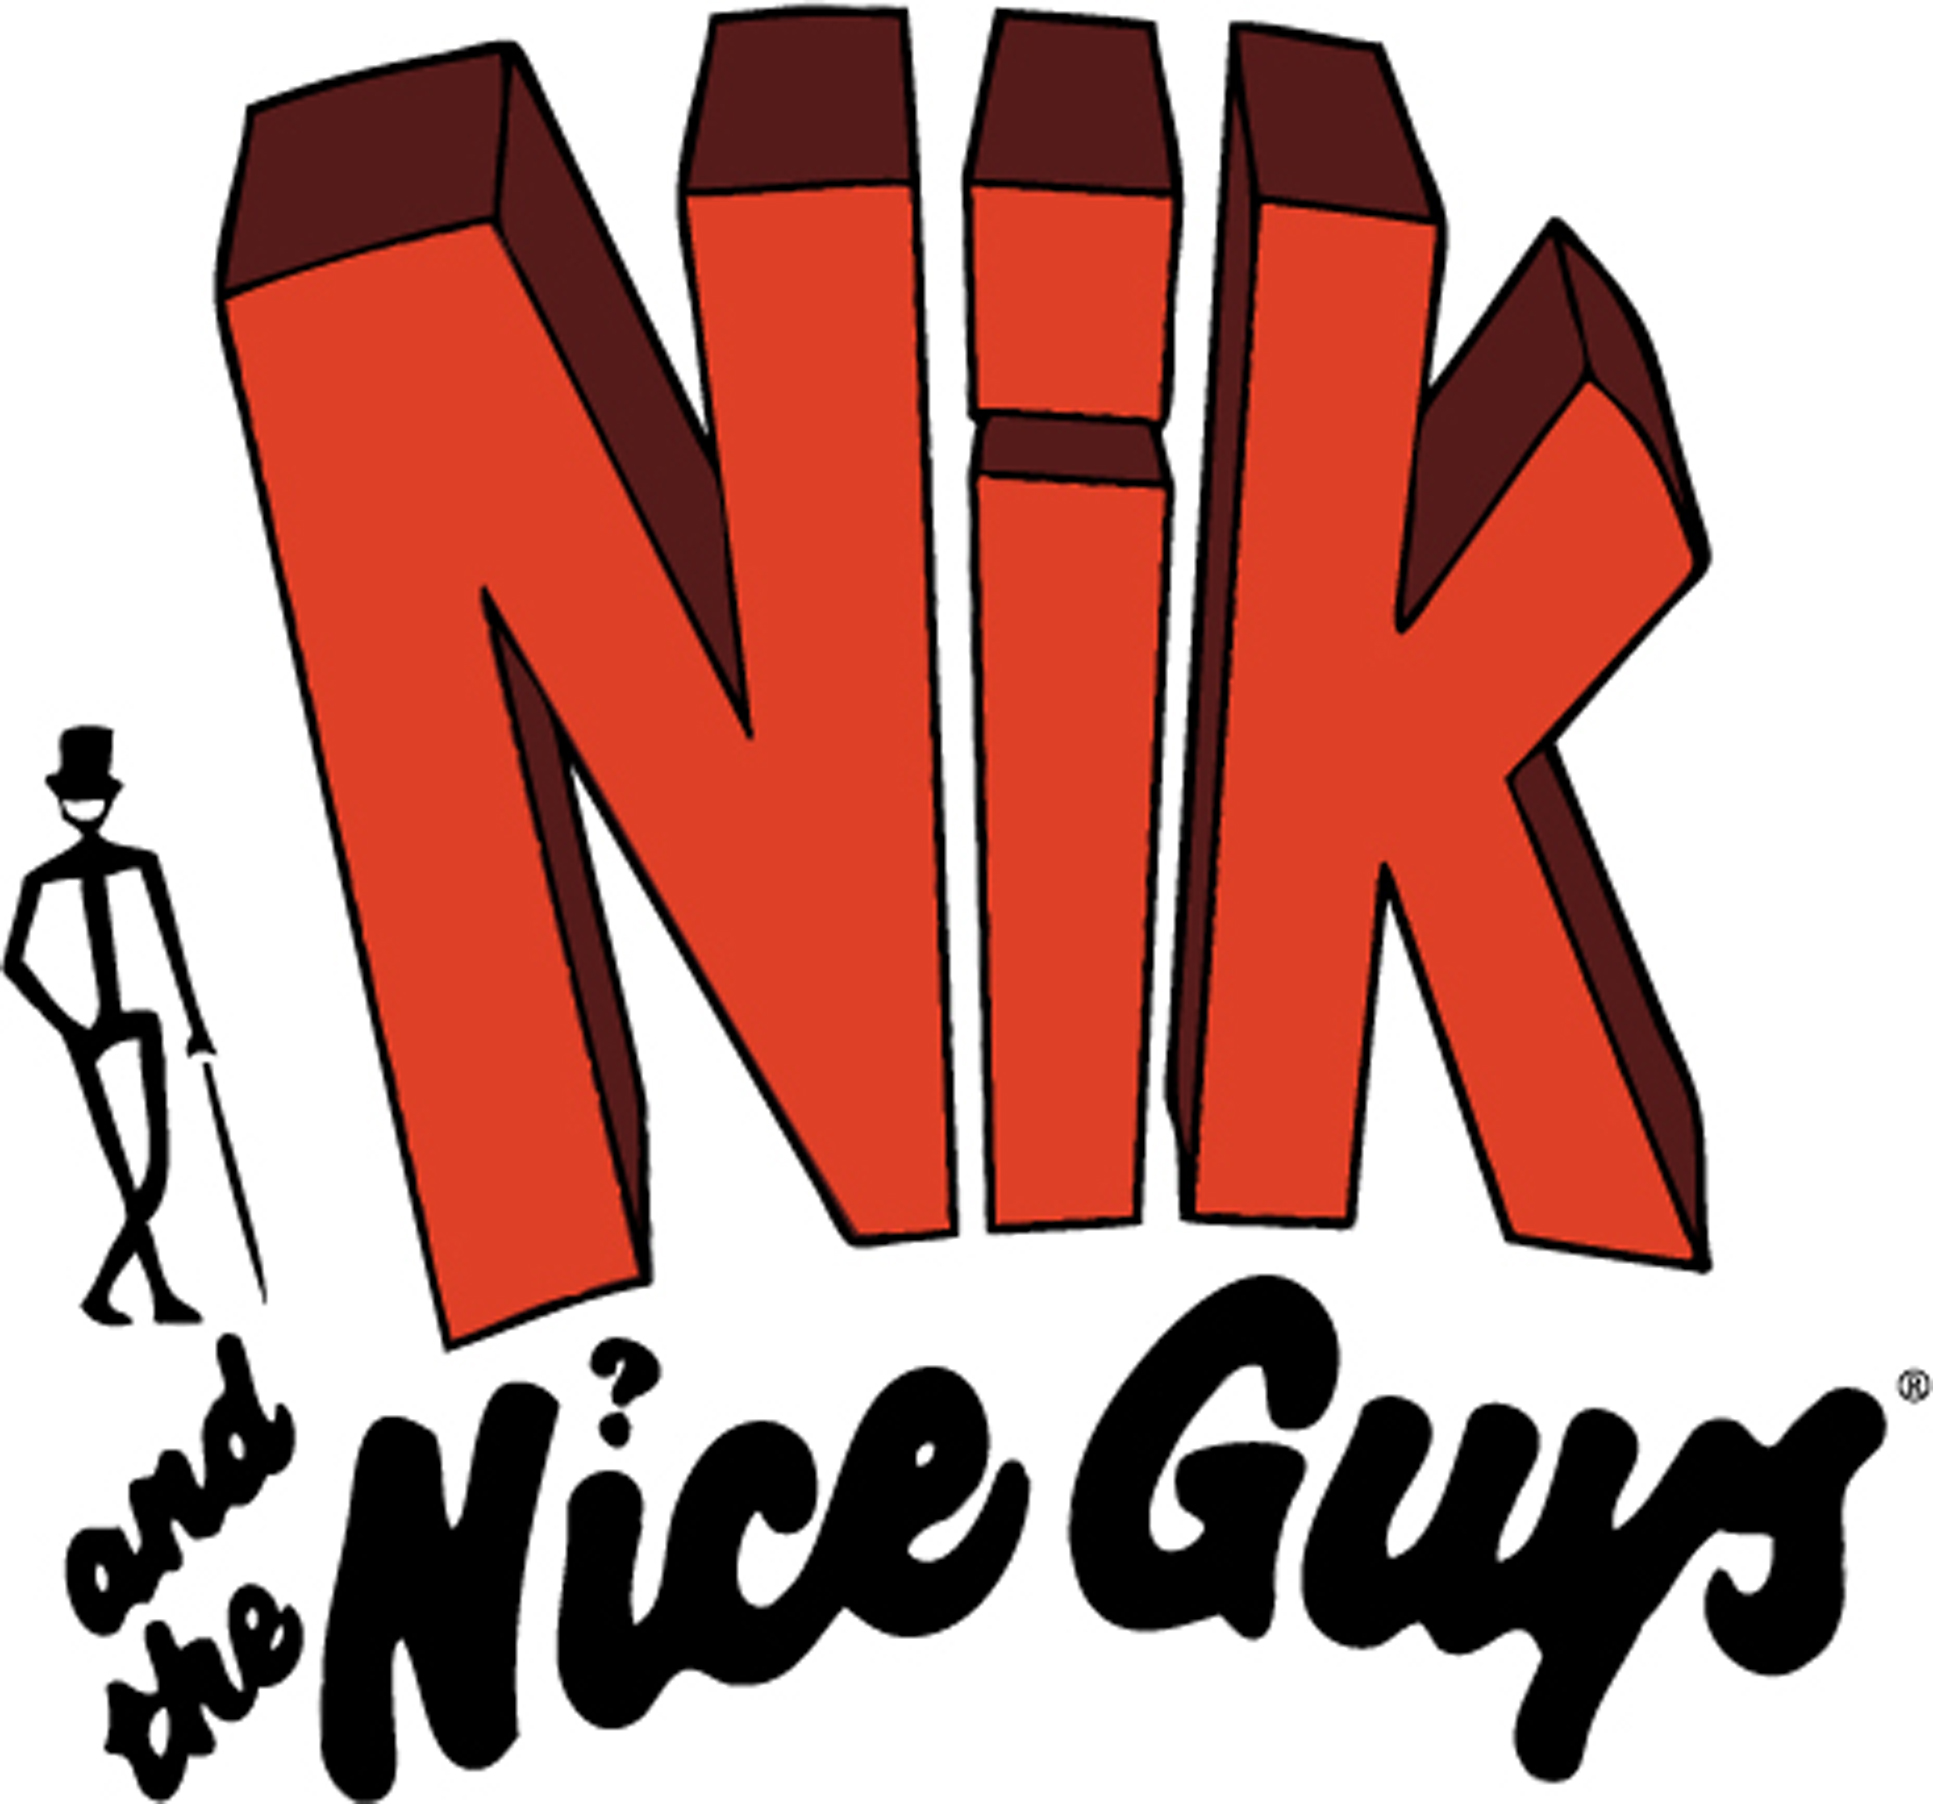 The Nice Guys - Wikipedia